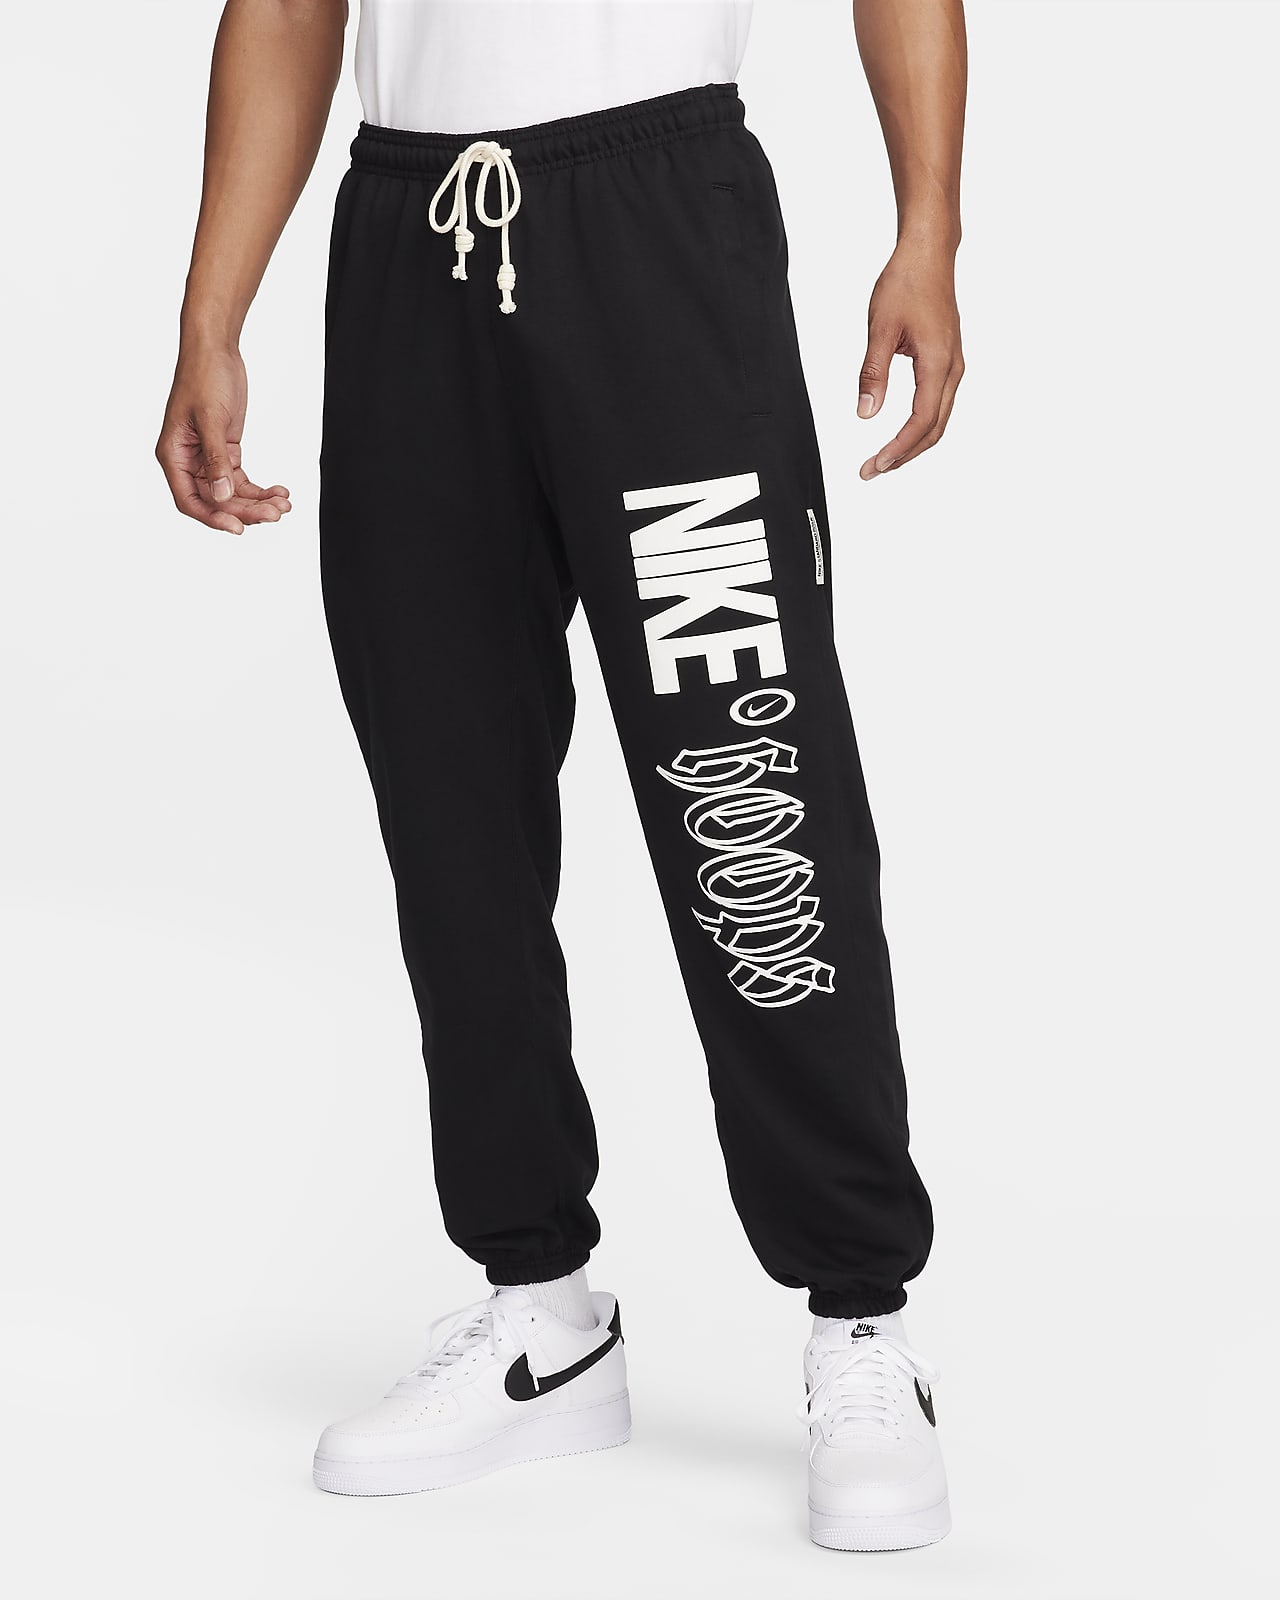 Nike Standard Issue Pantalons de bàsquet Dri-FIT - Home